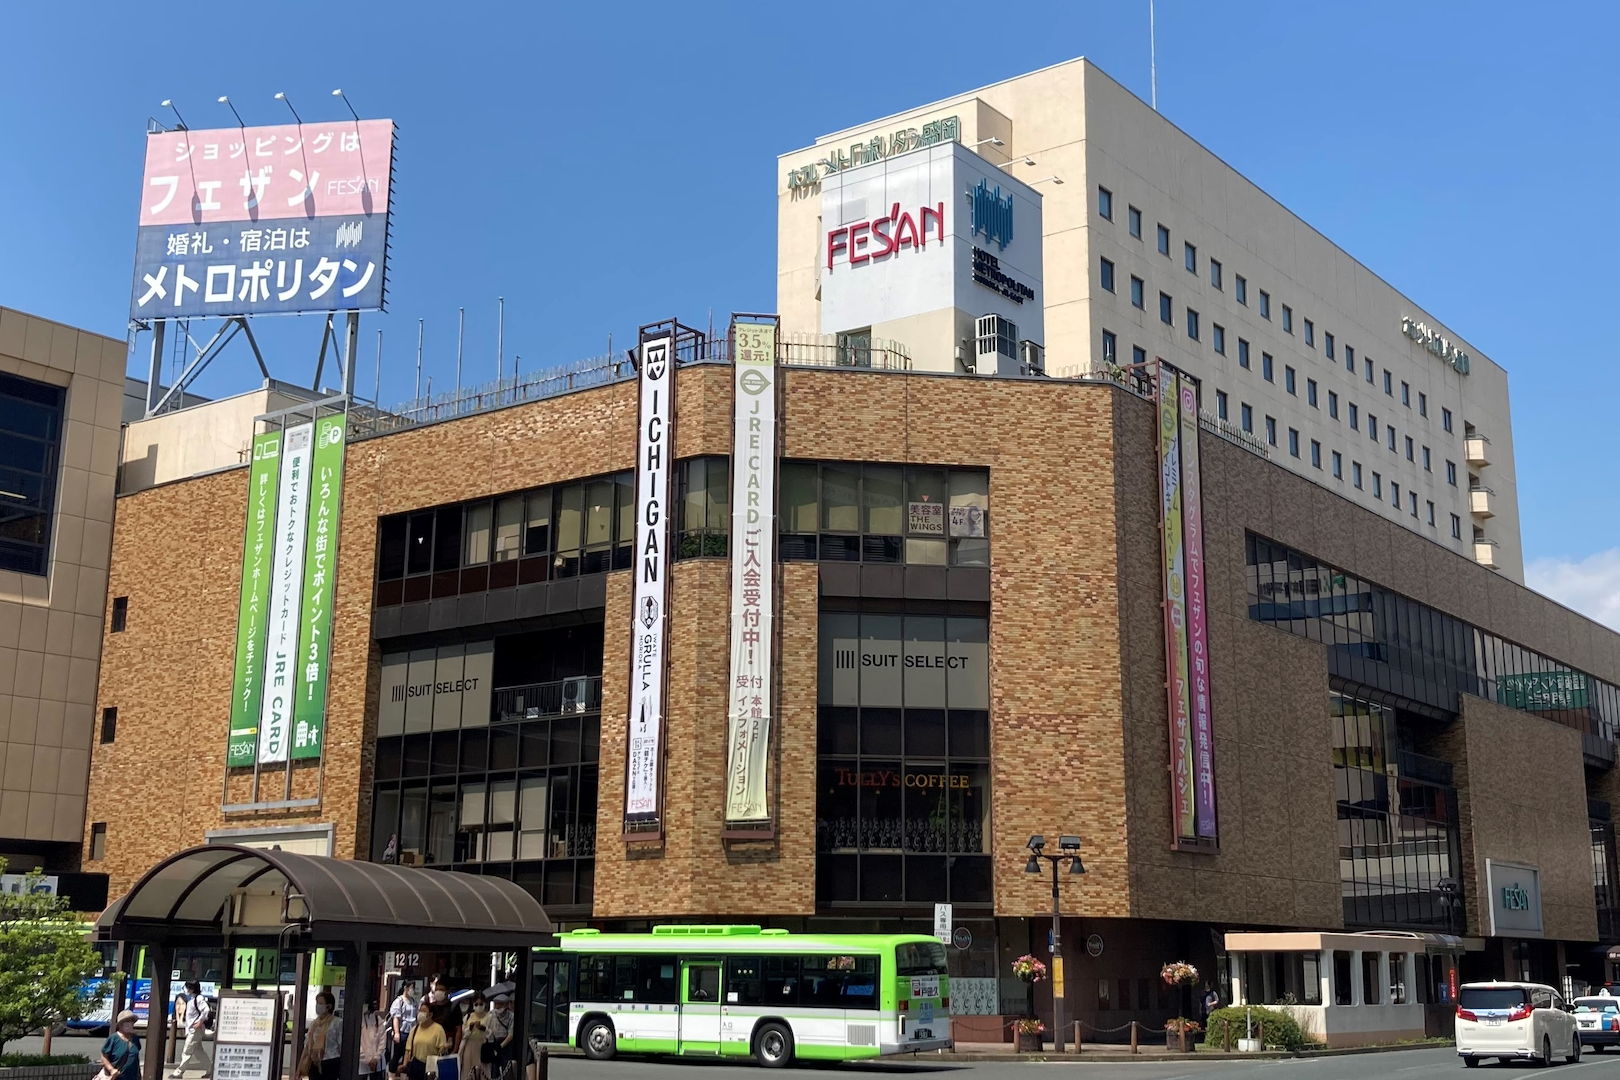 JR Morioka Station Building Fes'an